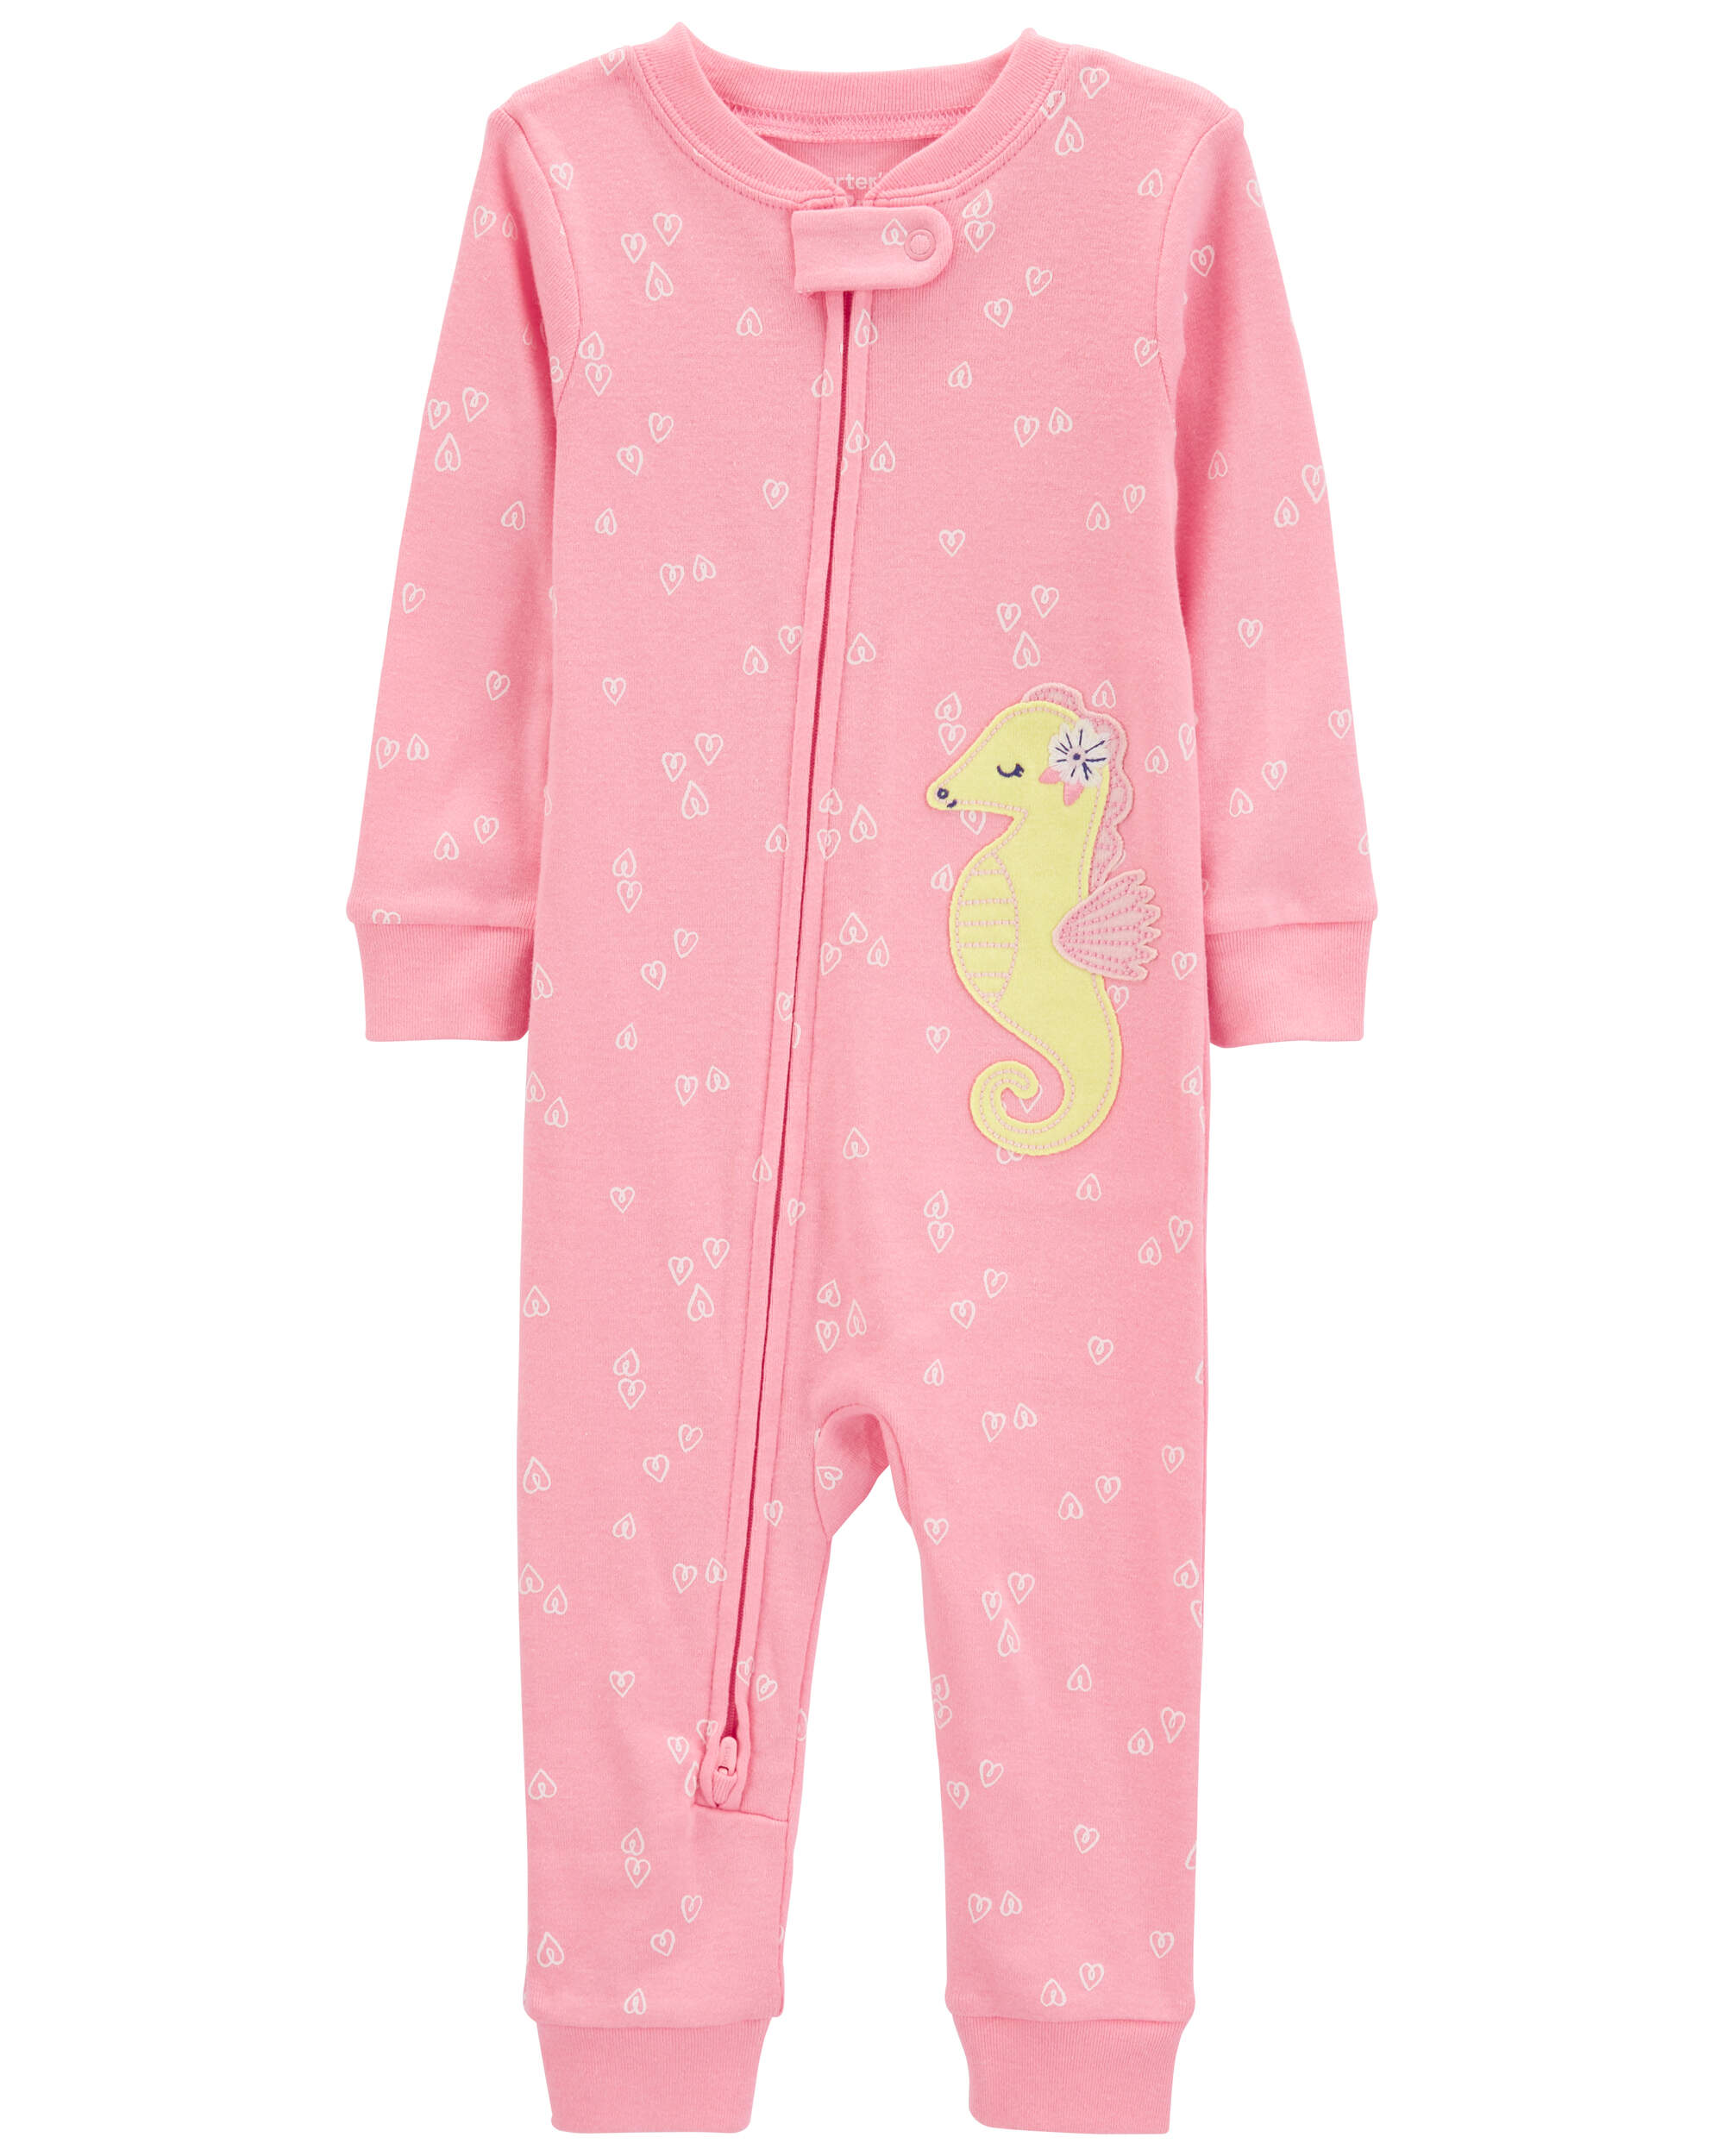 Baby 1-Piece Sea Horse 100% Snug Fit Cotton Footless Pyjamas